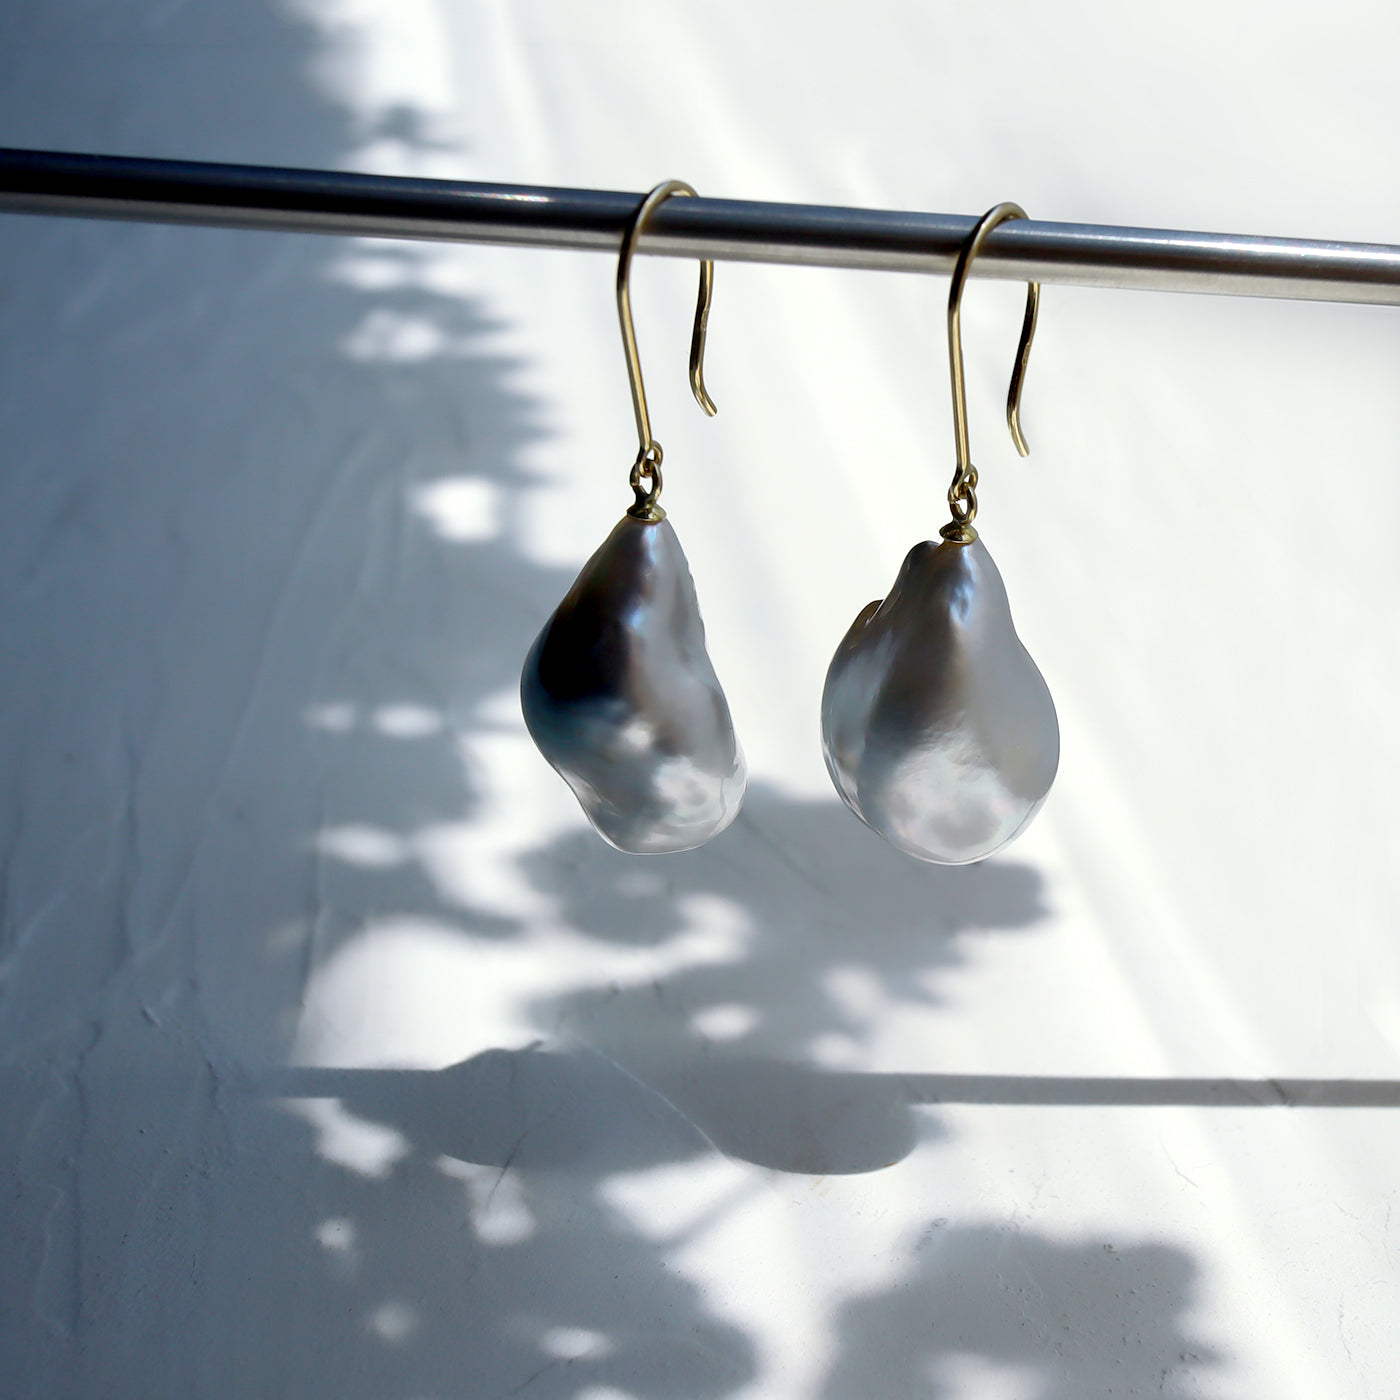 Pearl Hanging Earrings - 12mm 黒蝶ケシパール